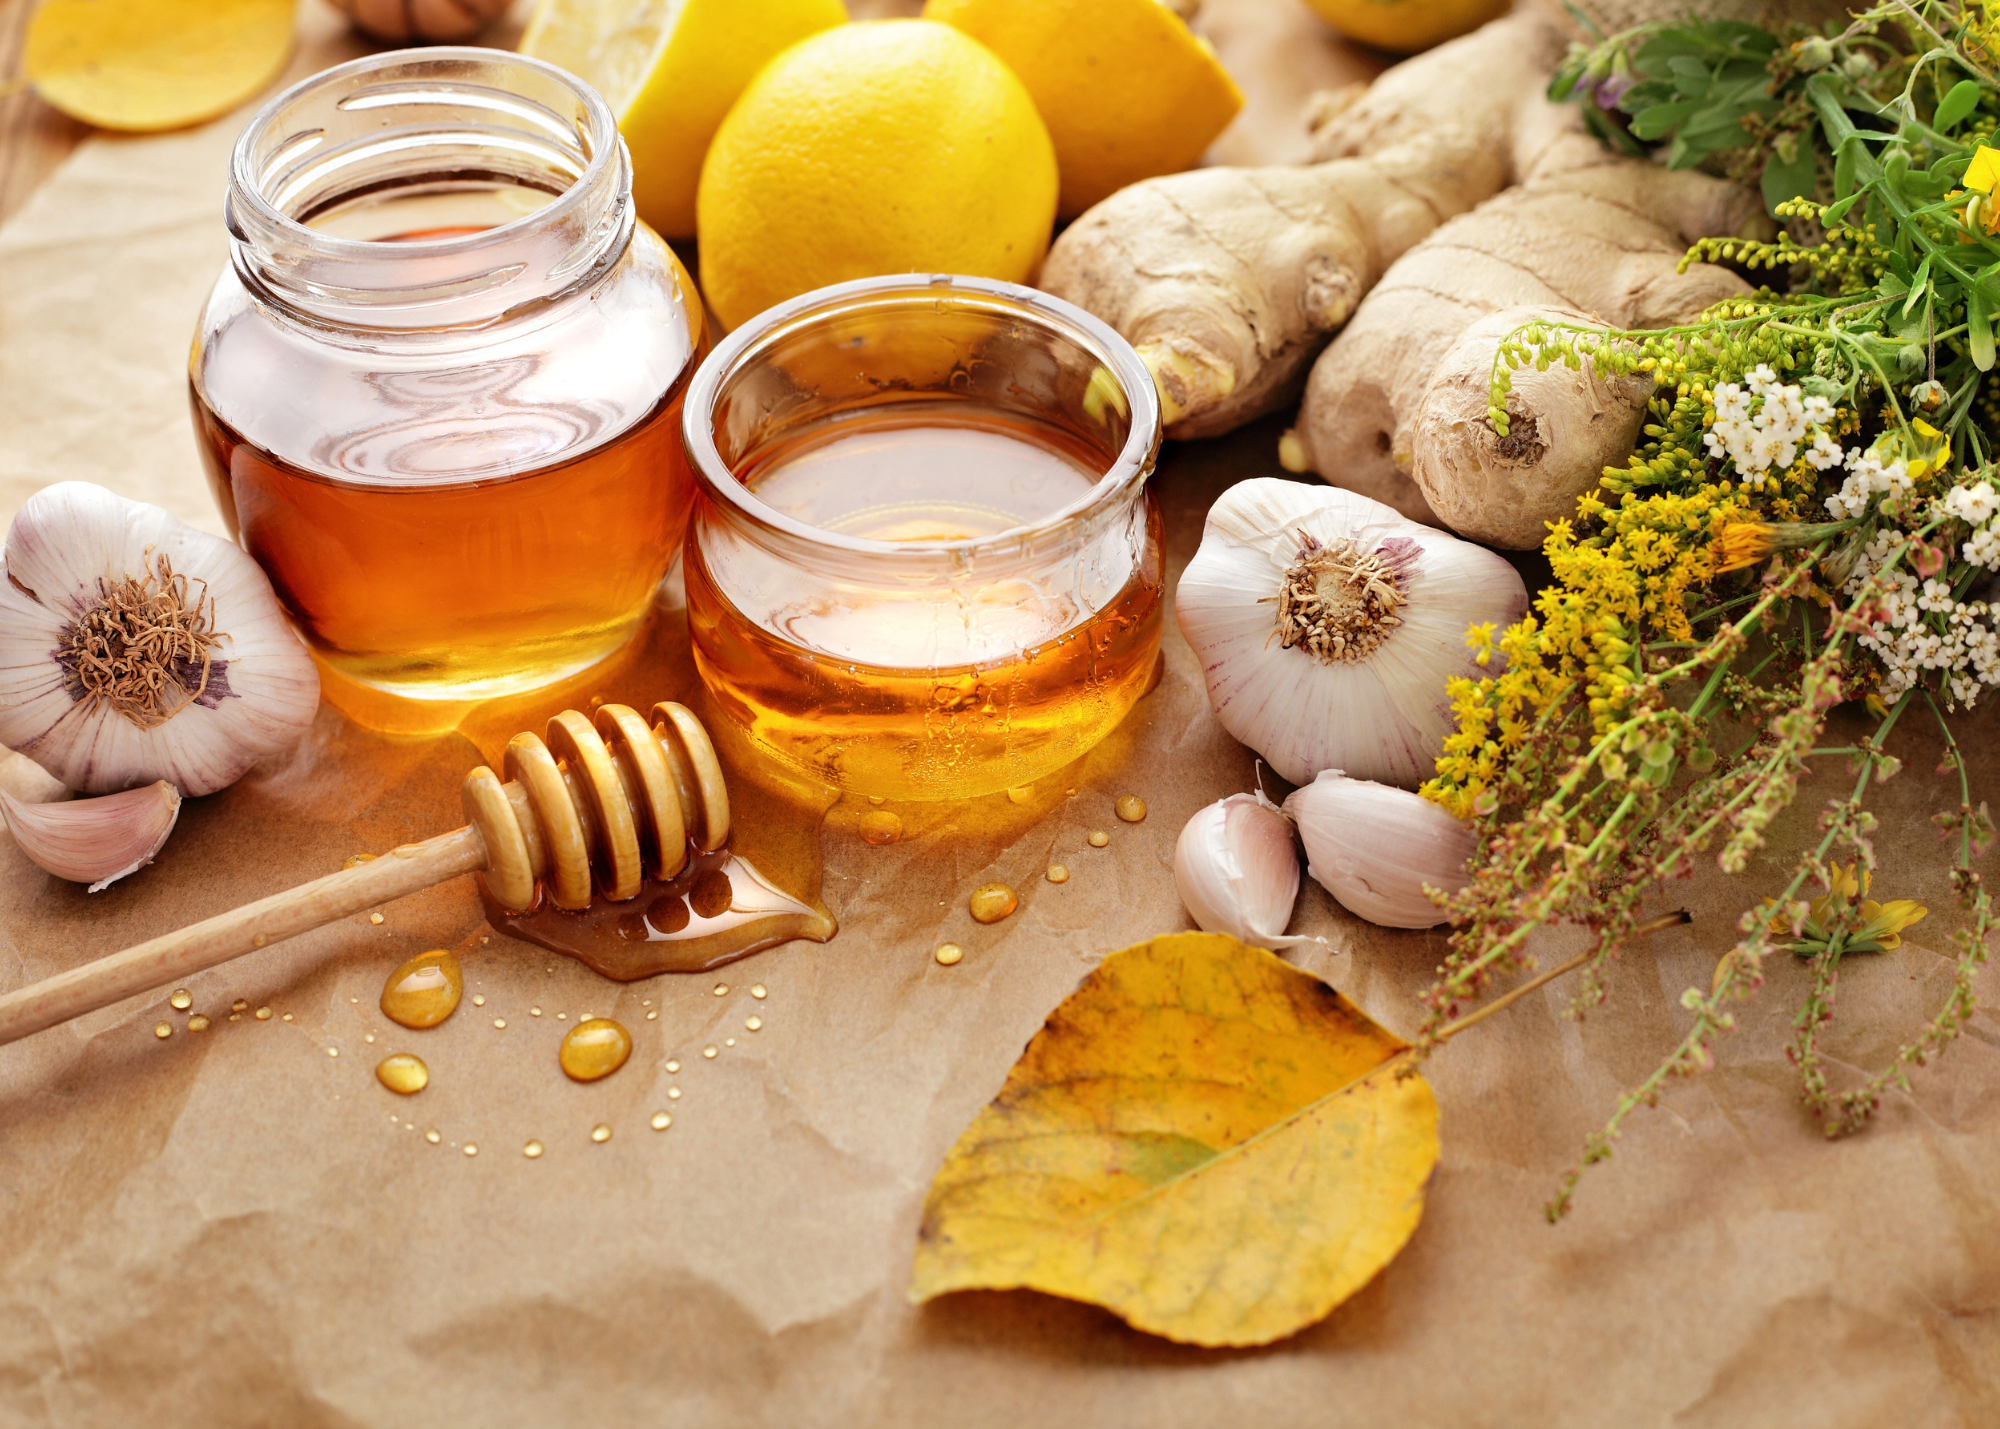 honey, lemons, and garlic, immune boosting foods